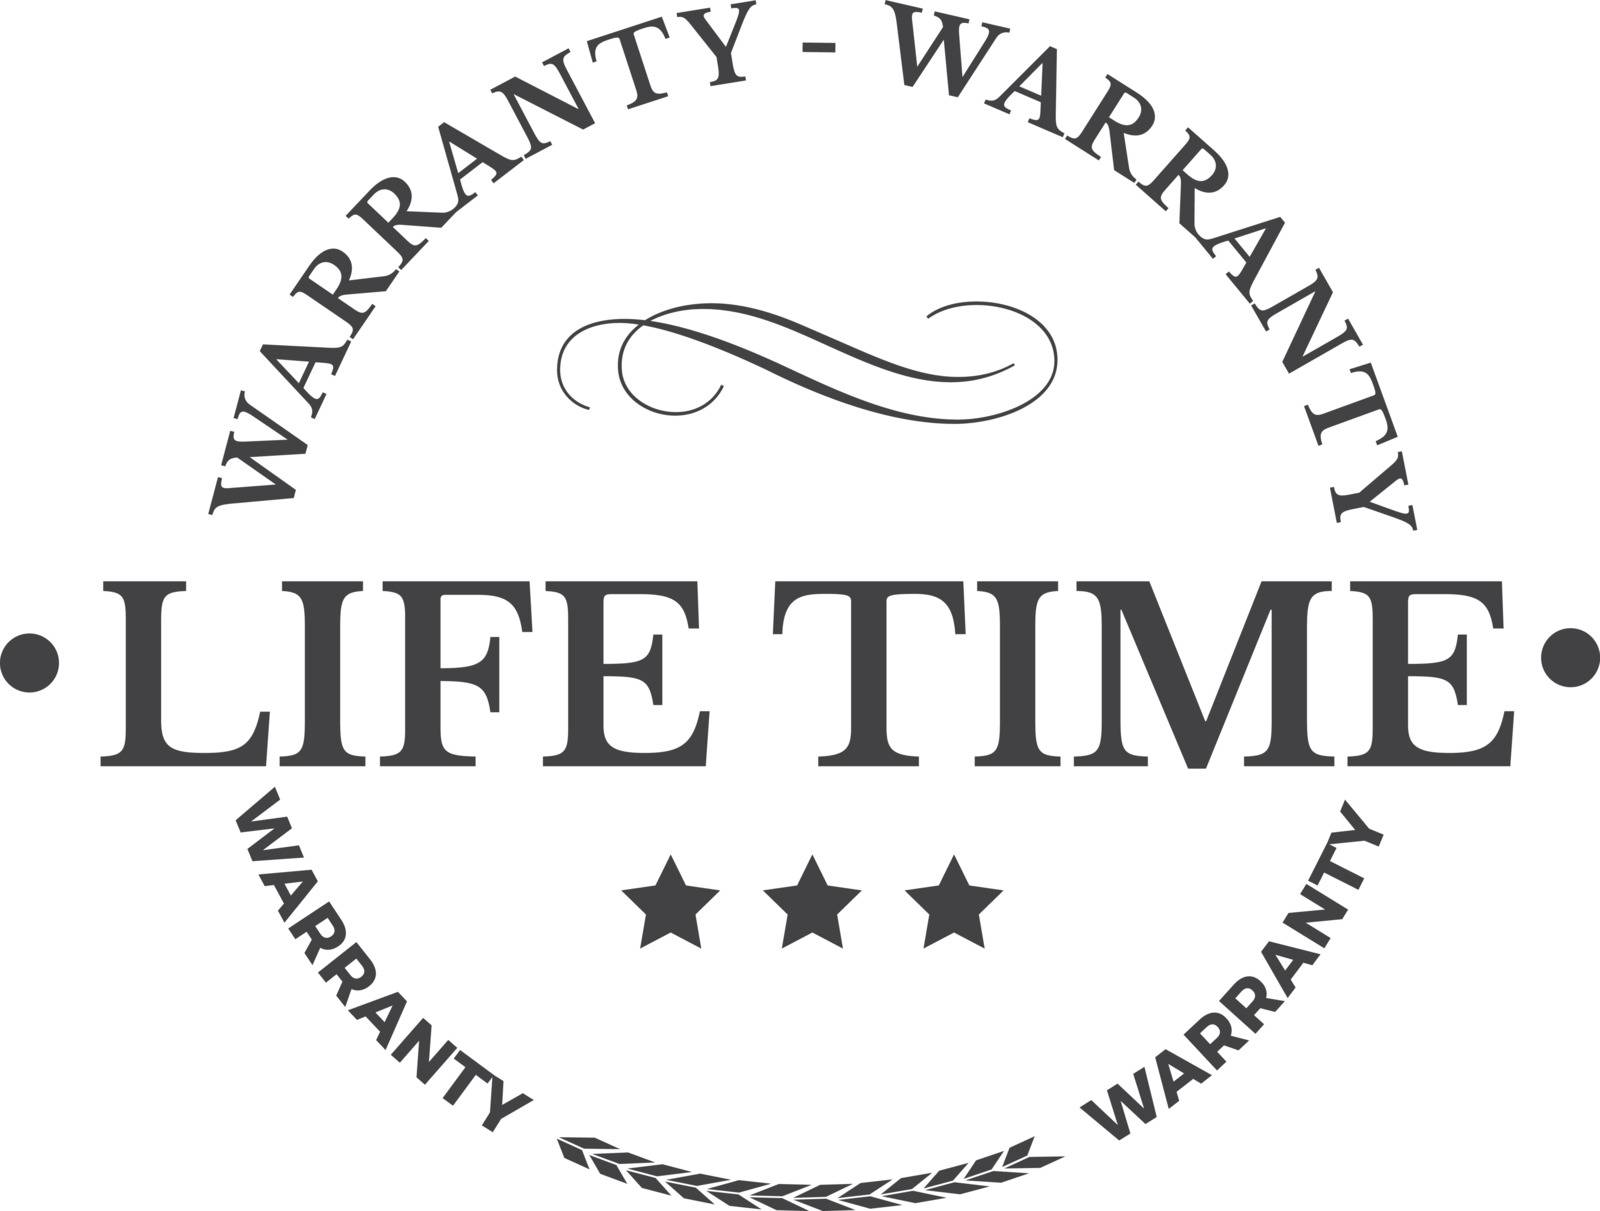 lifetime warranty by teguh_jam@yahoo.com